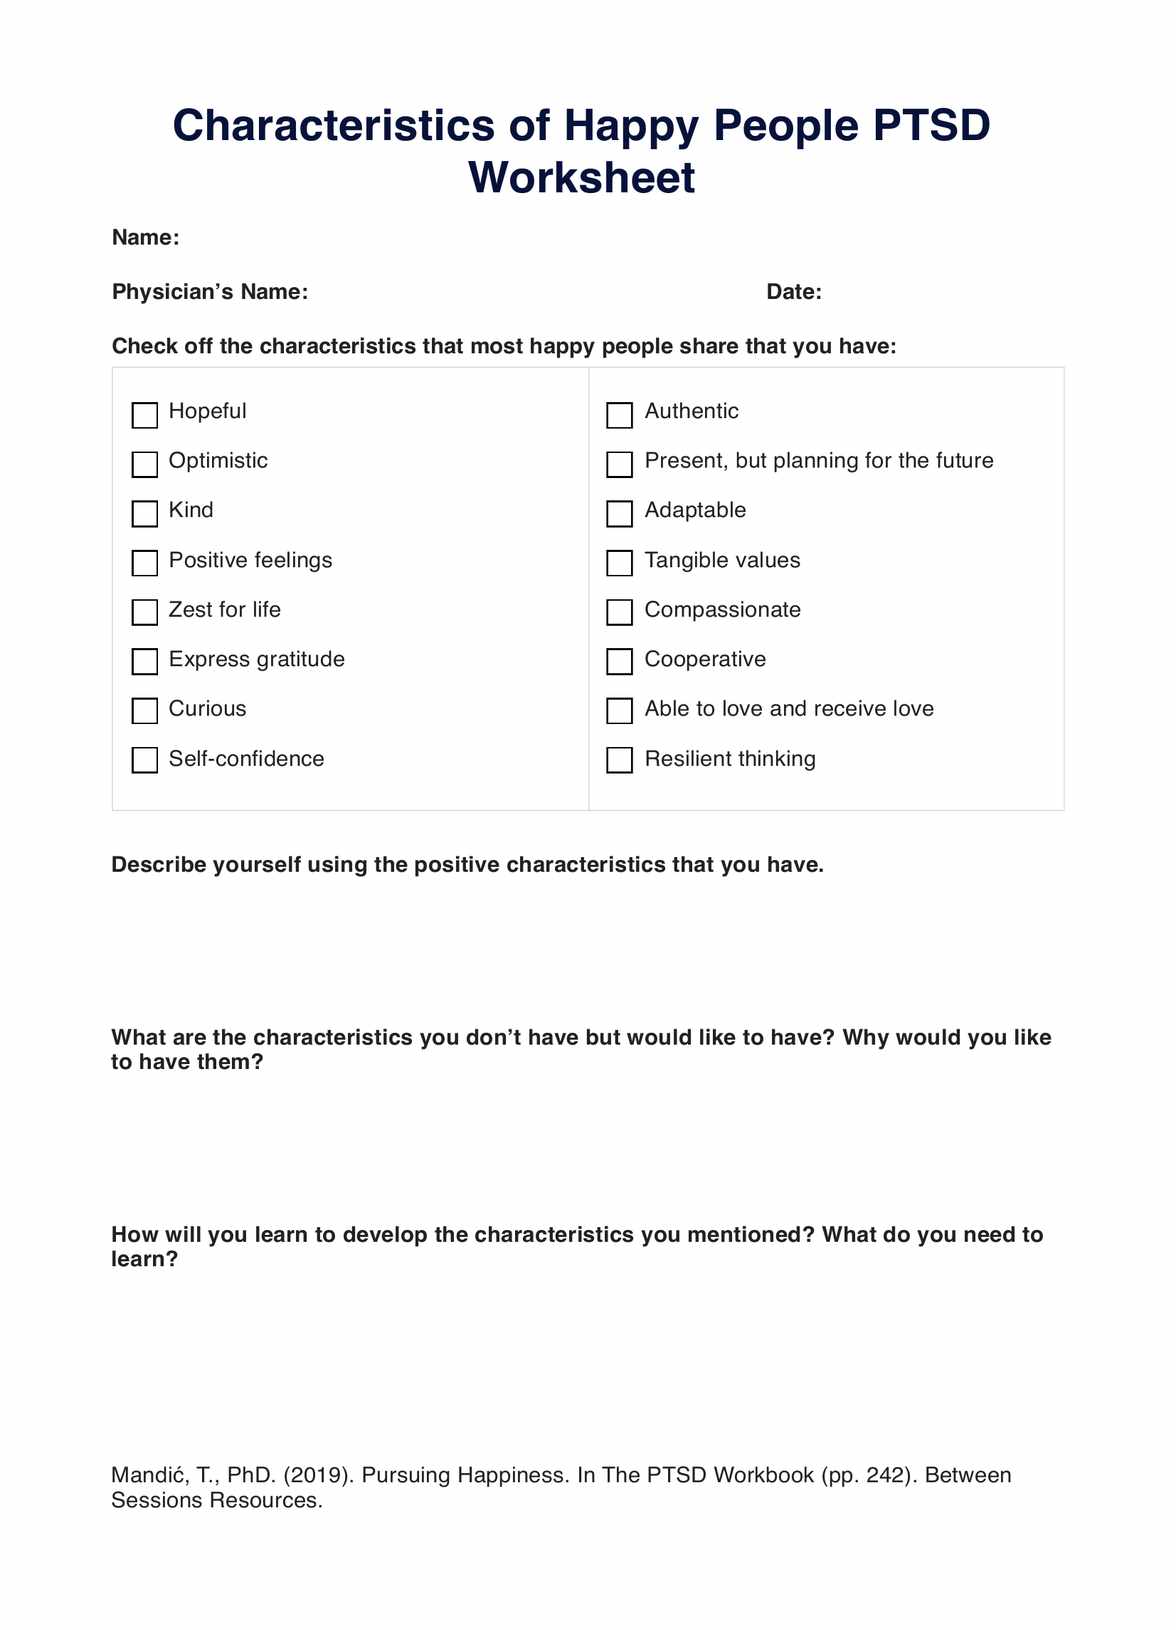 Characteristics of Happy People PTSD Worksheet PDF Example